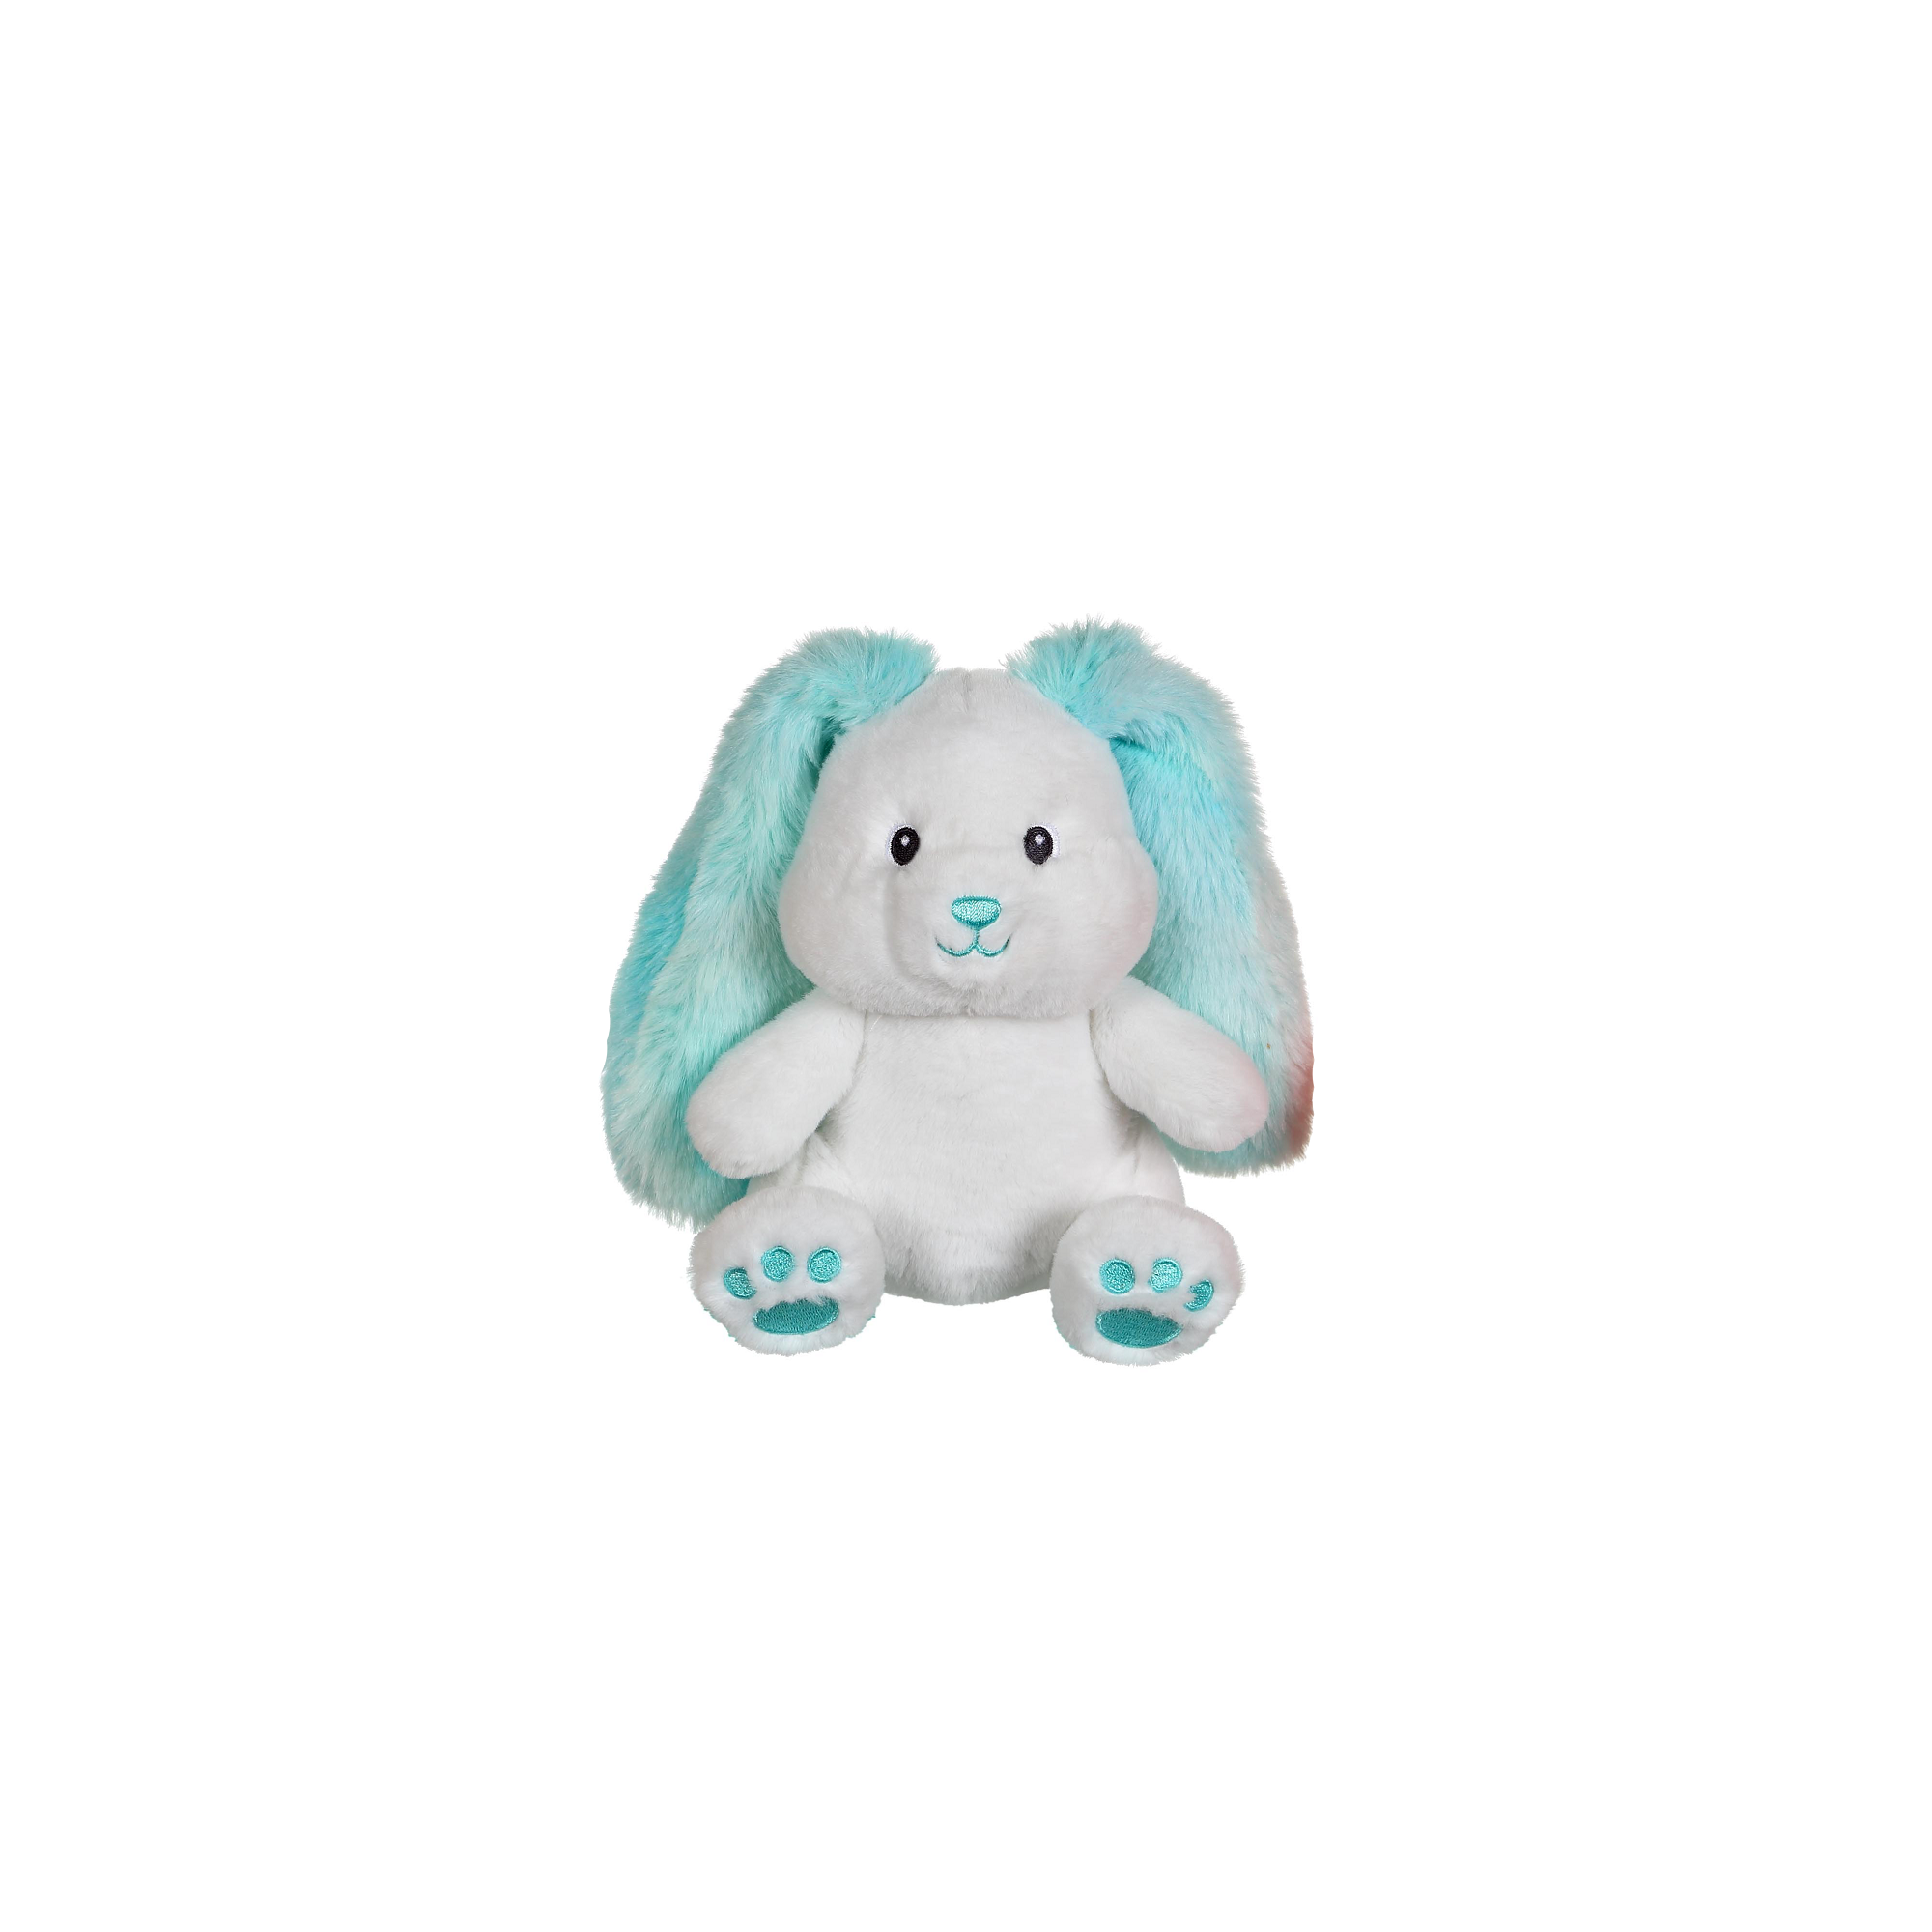 Fluffy Rabbit - Turquoise - 15 CM.